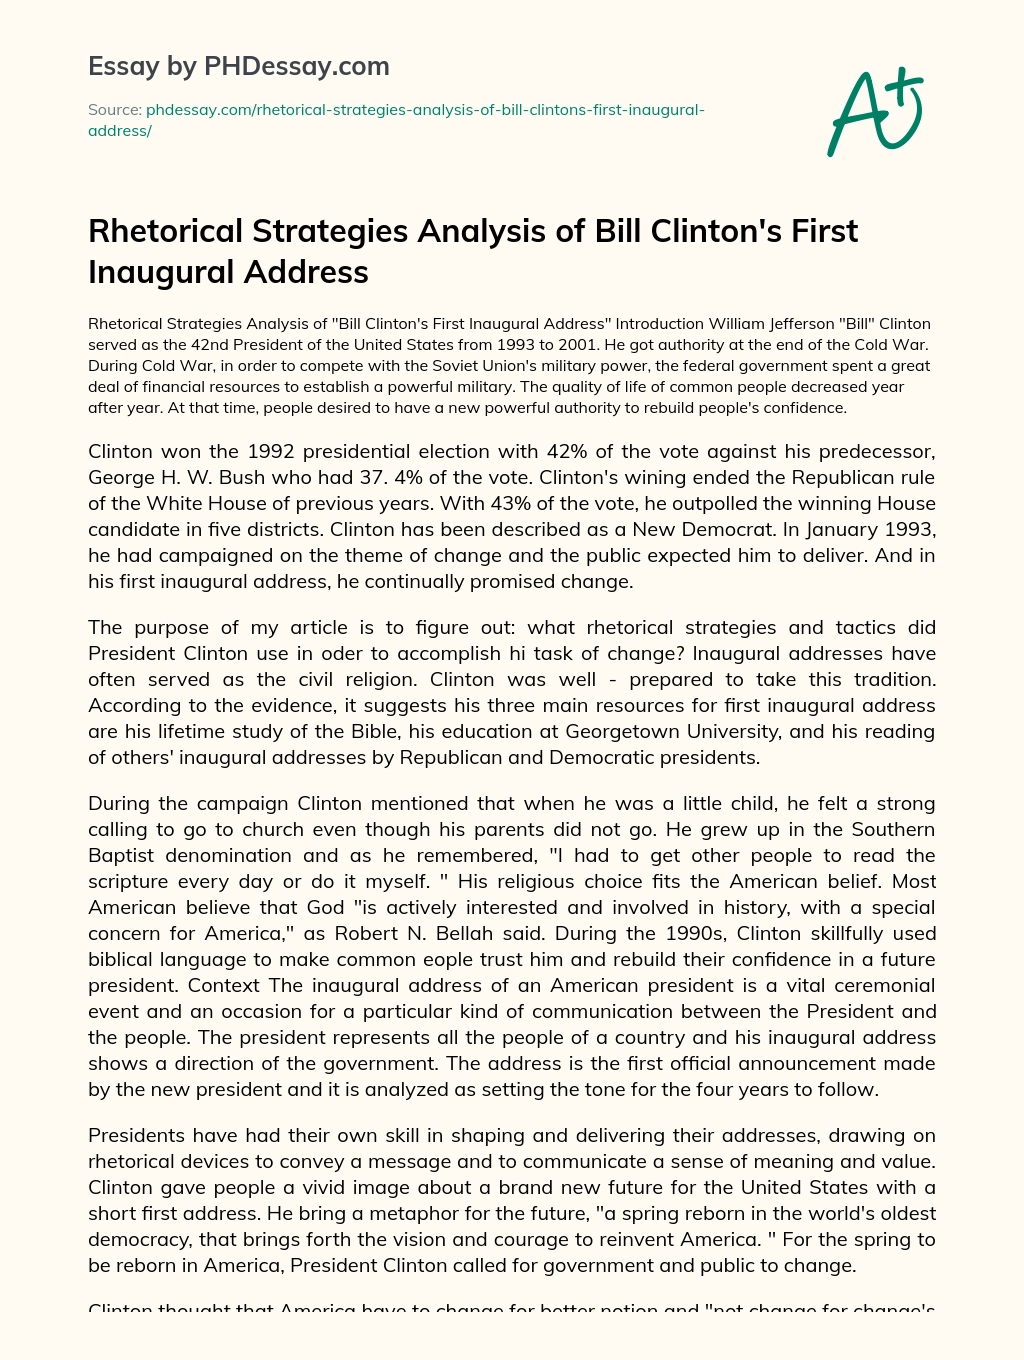 Rhetorical Strategies Analysis of Bill Clinton’s First Inaugural Address essay